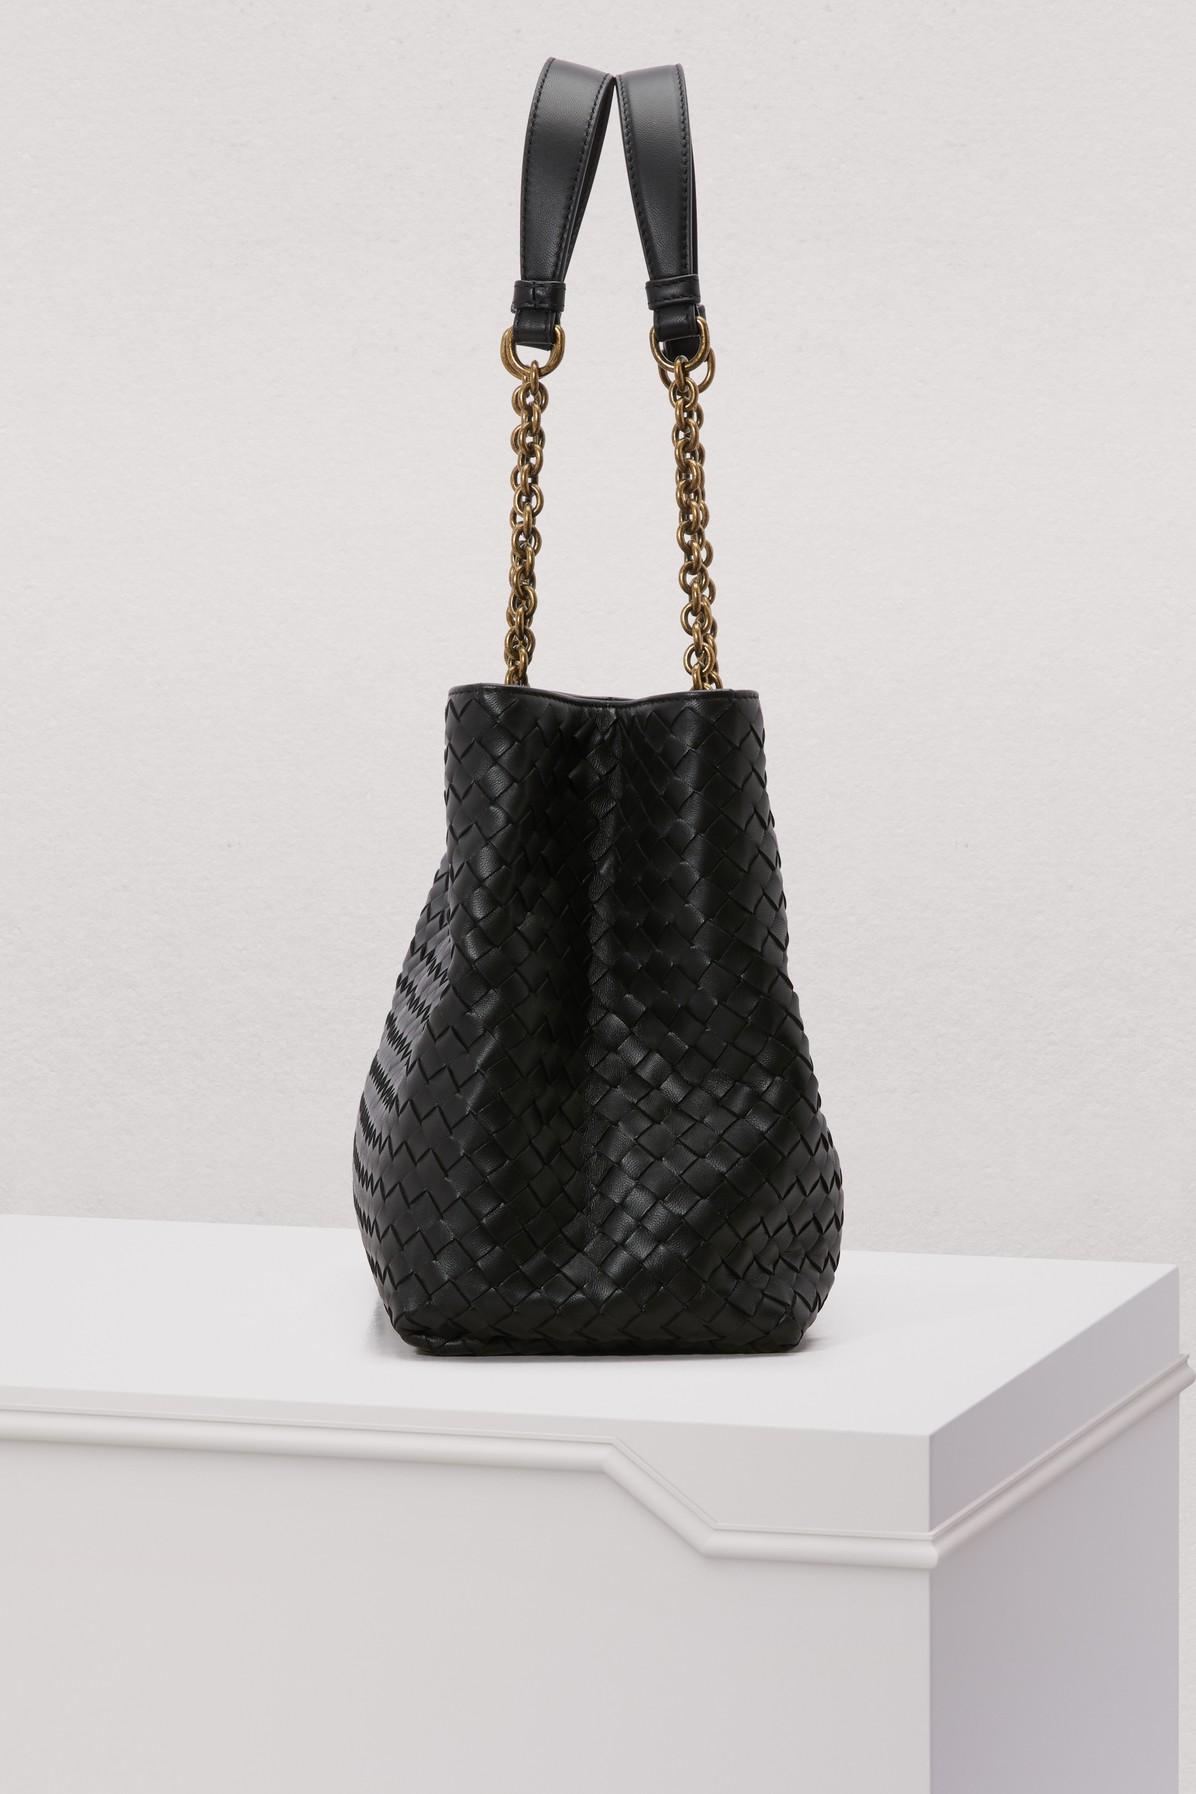 Bottega Veneta Leather Tote Bag With A Chain in Black - Lyst